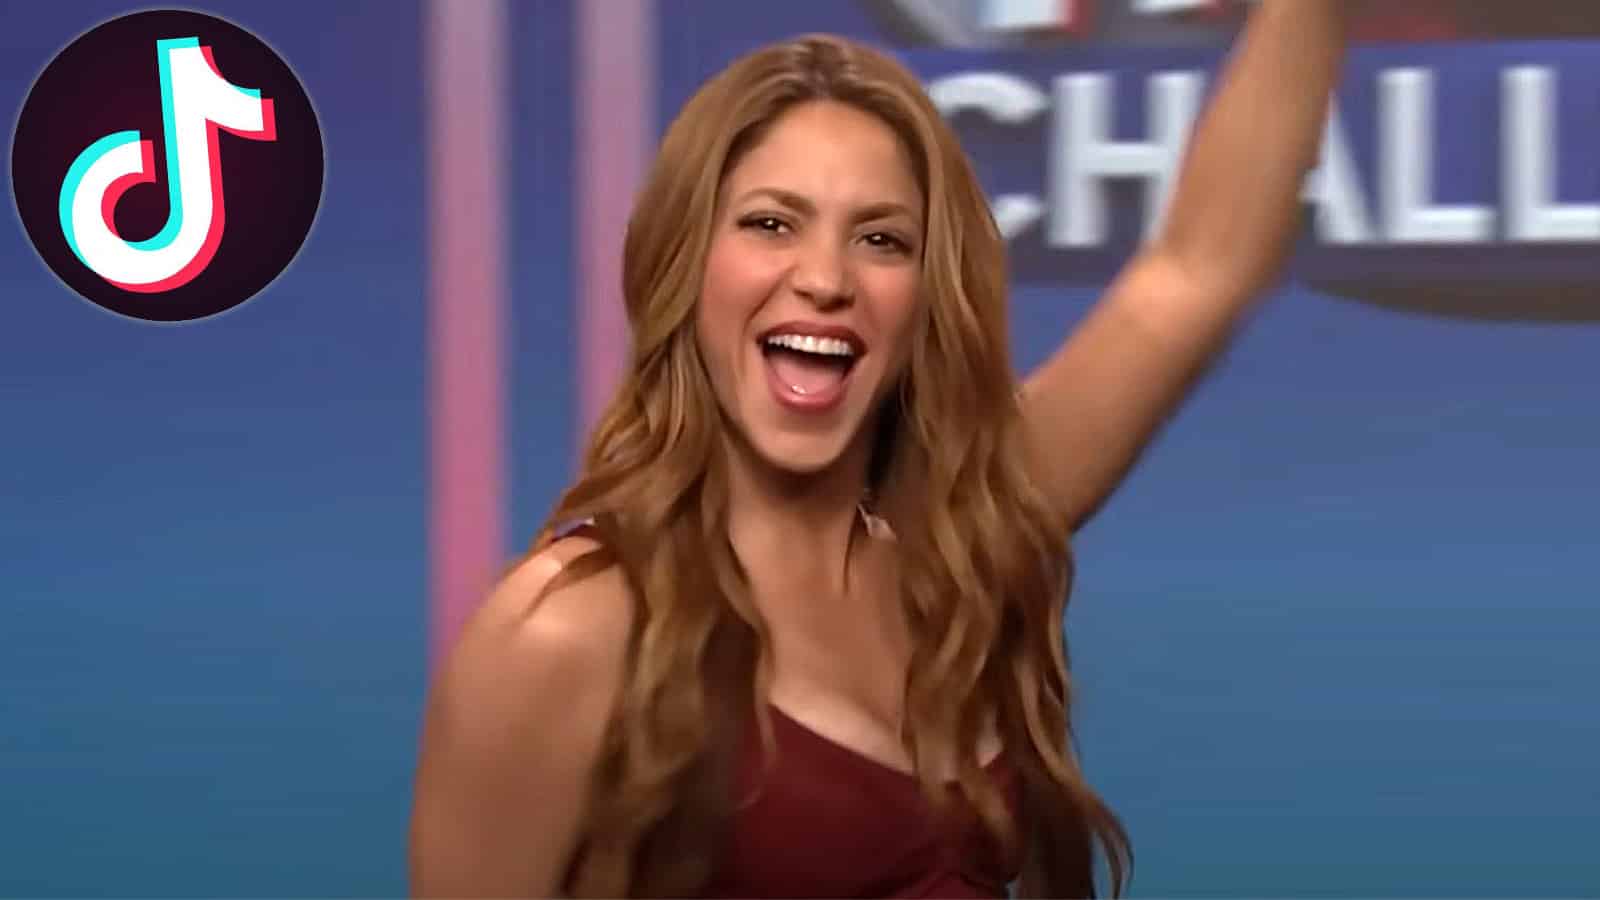 Shakira goes viral for Jimmy Fallon dance contest